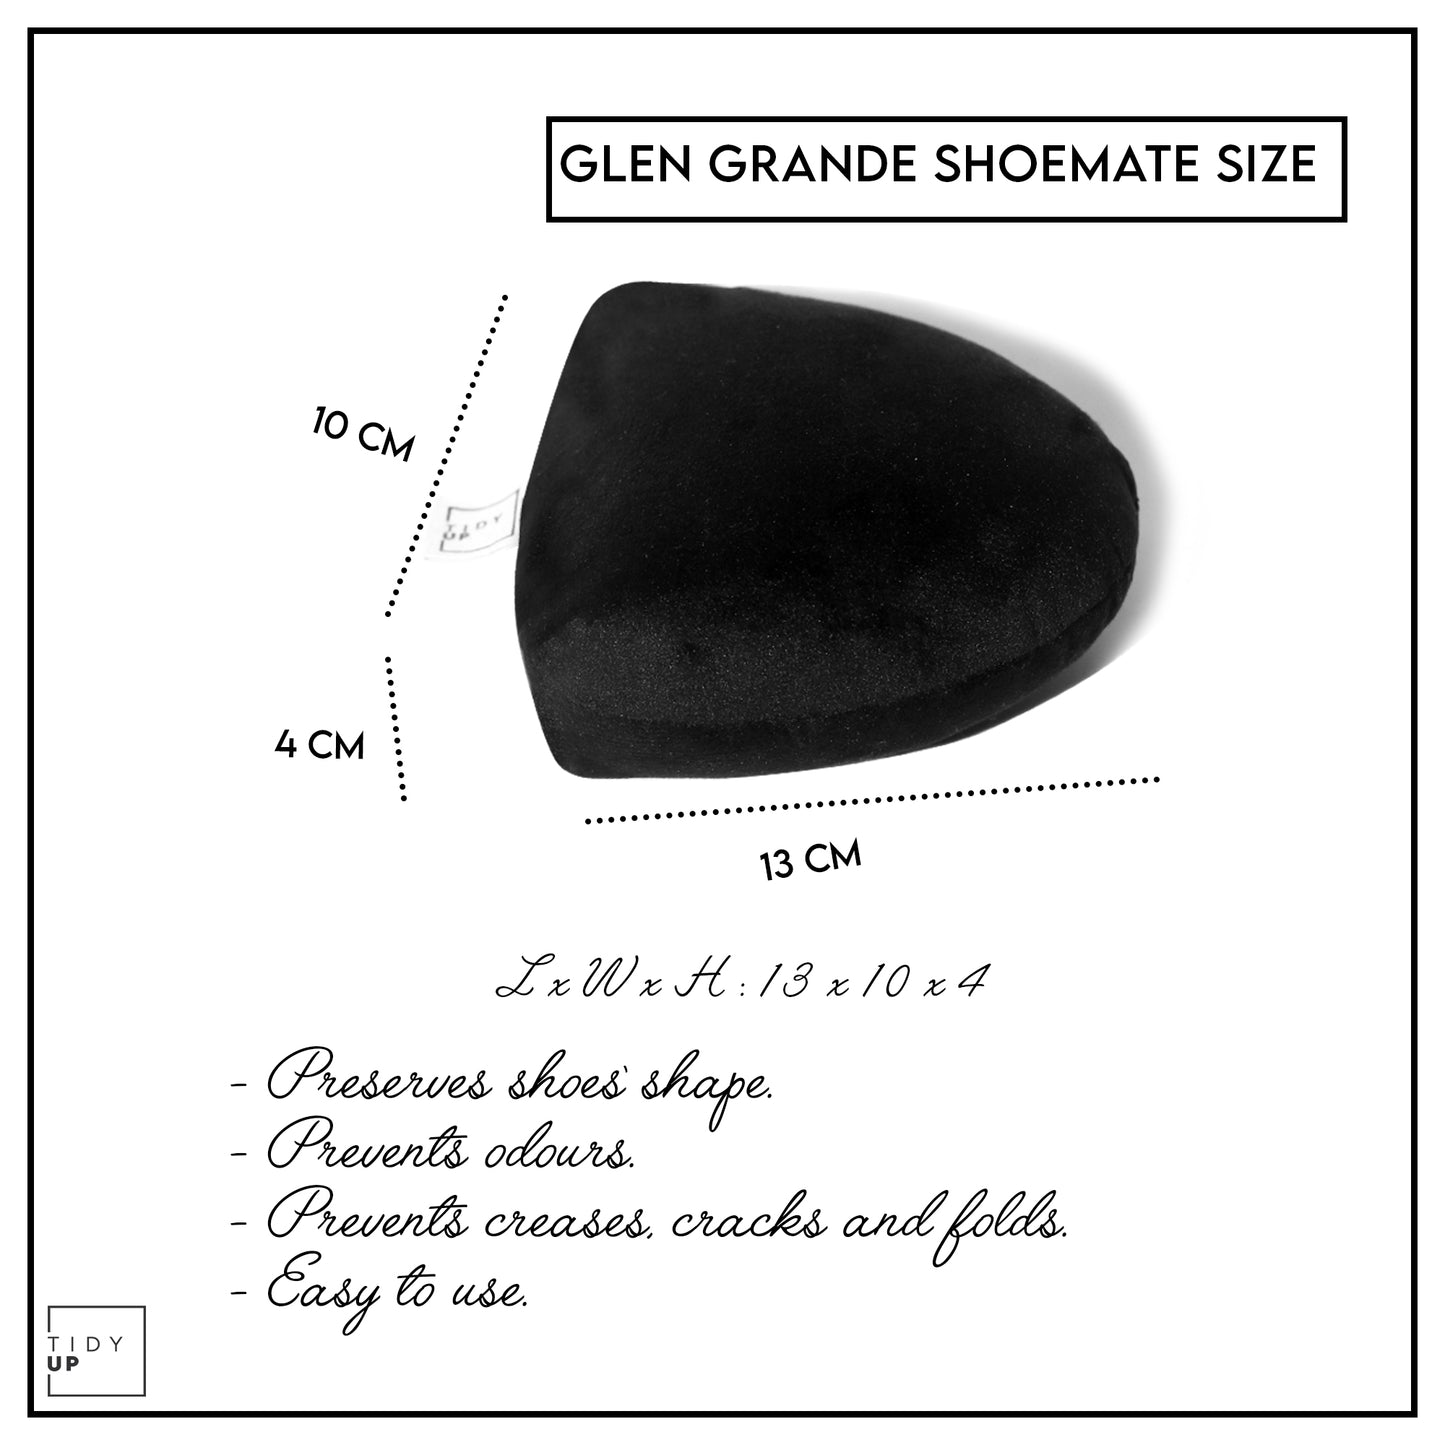 Glen Grande Shoemate